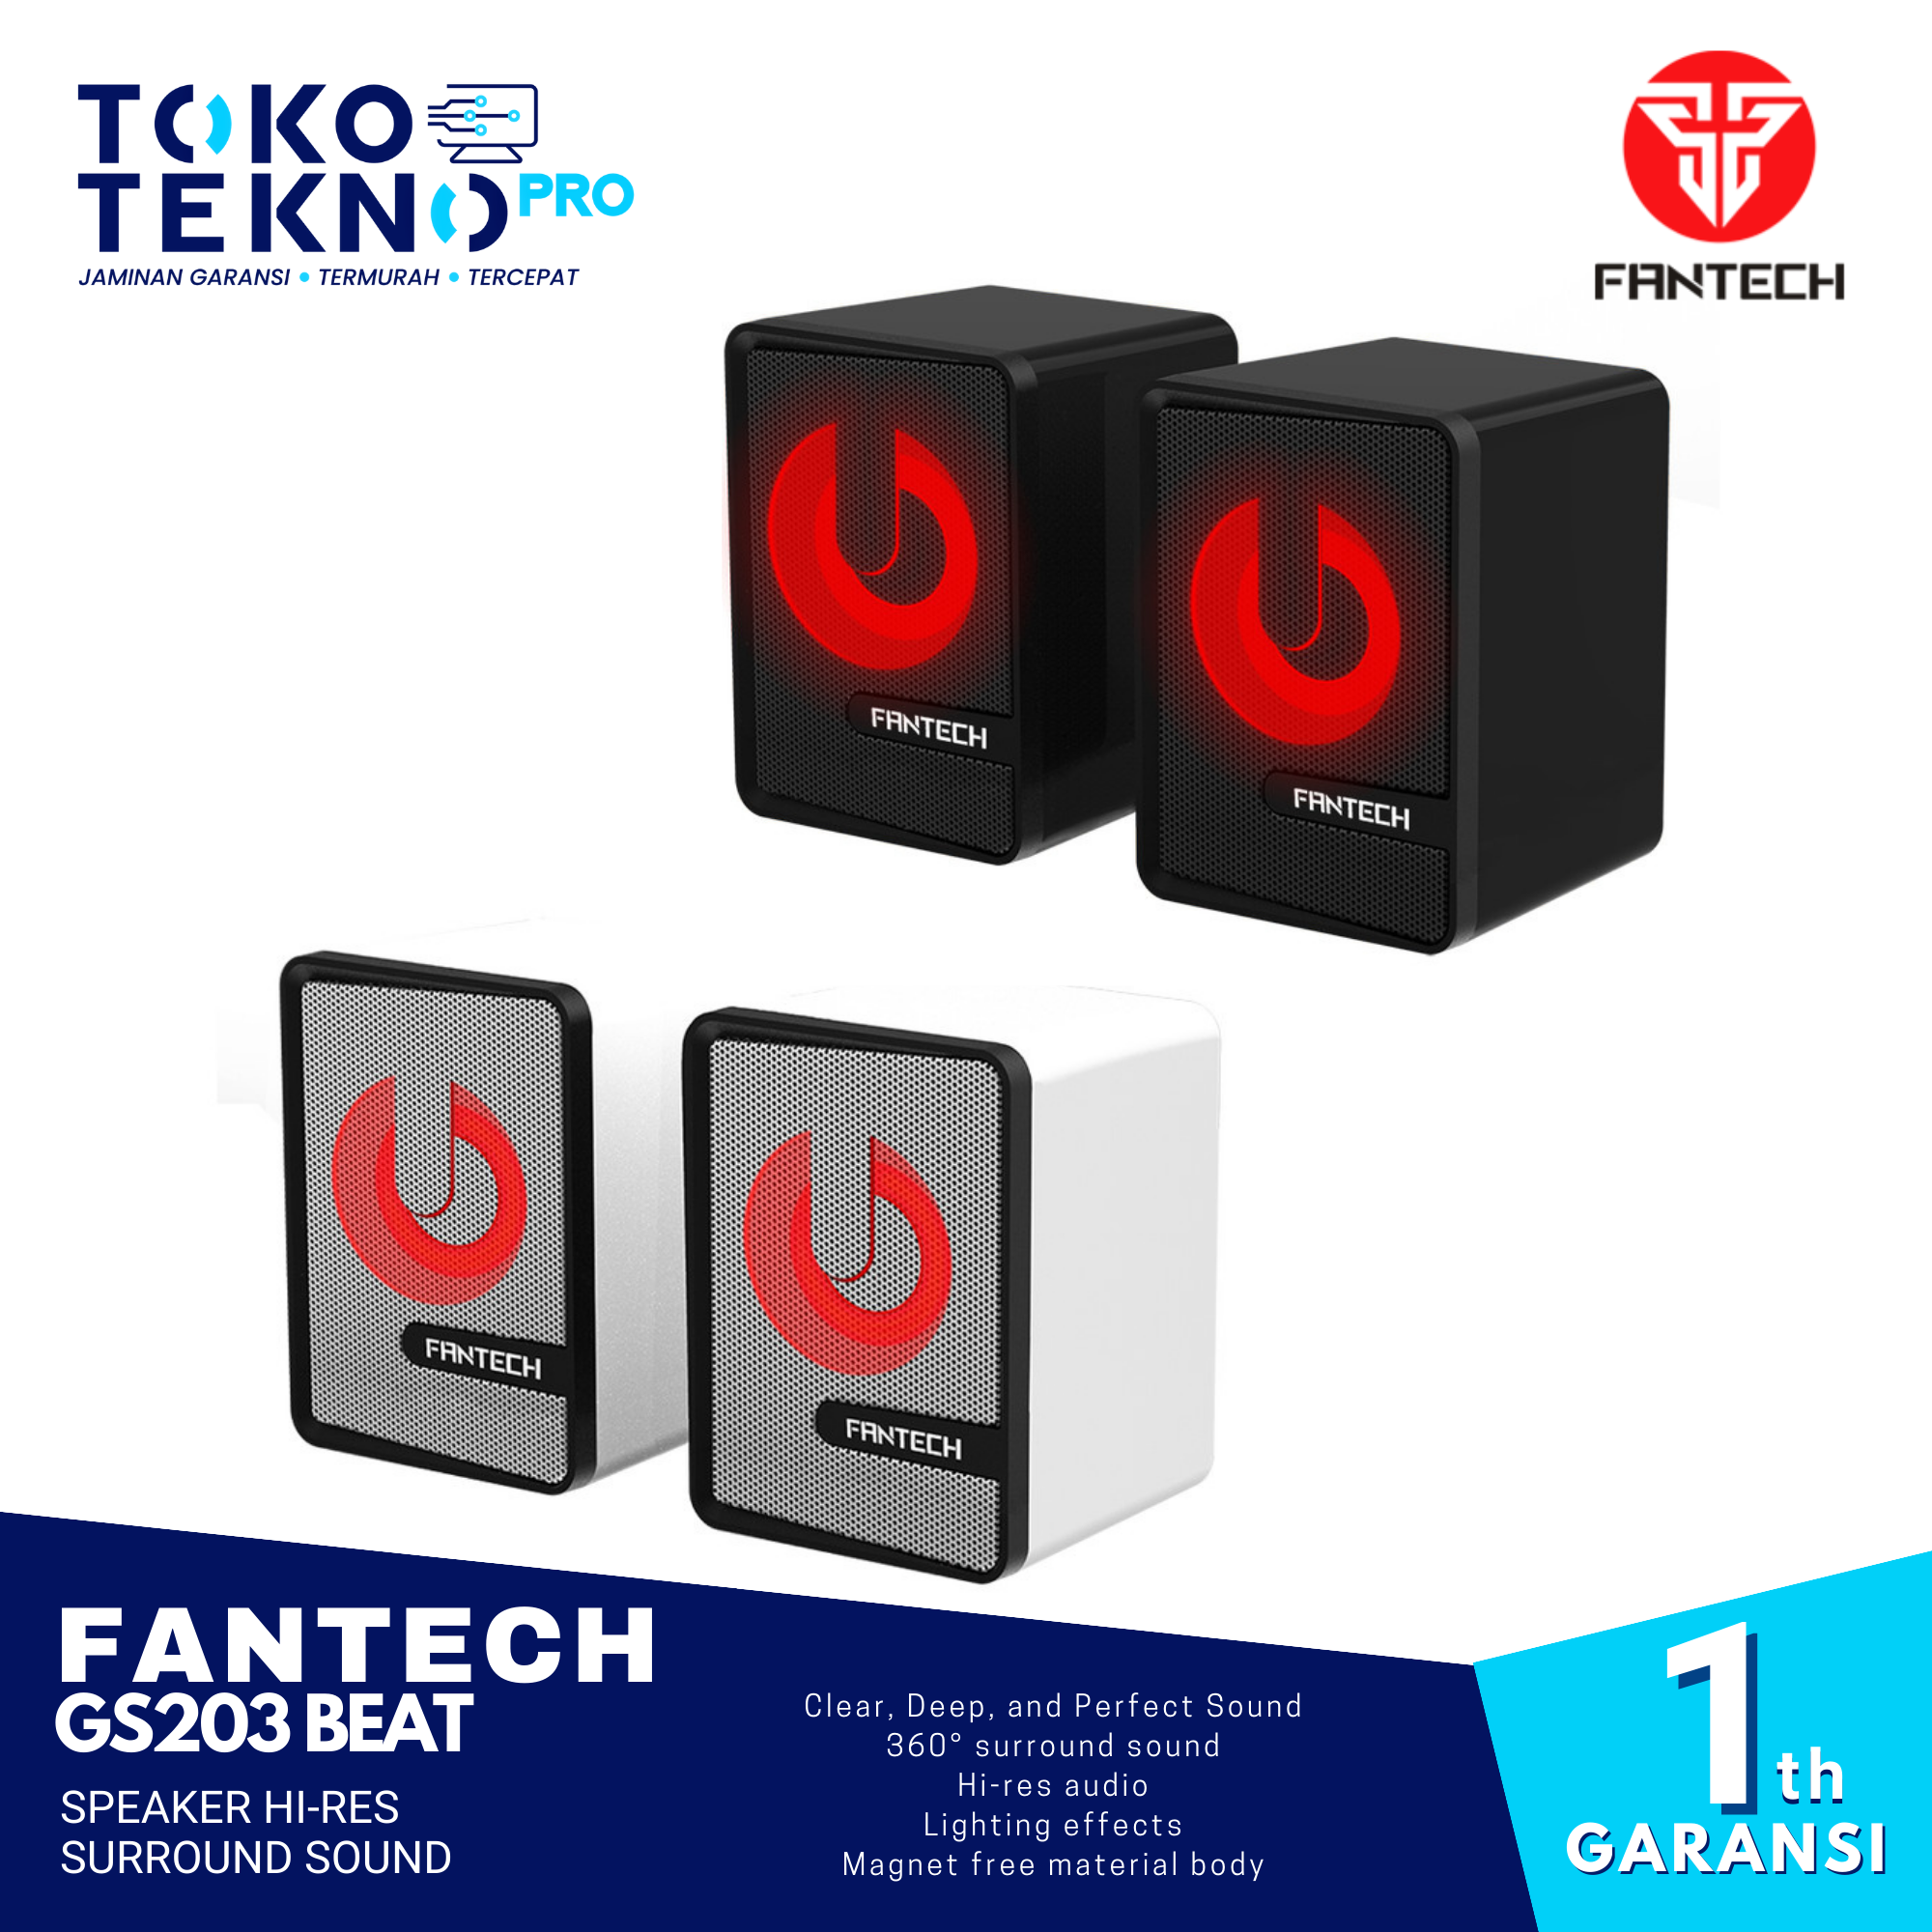 Fantech GS203 Beat Speaker Hi-Res Surround Sound